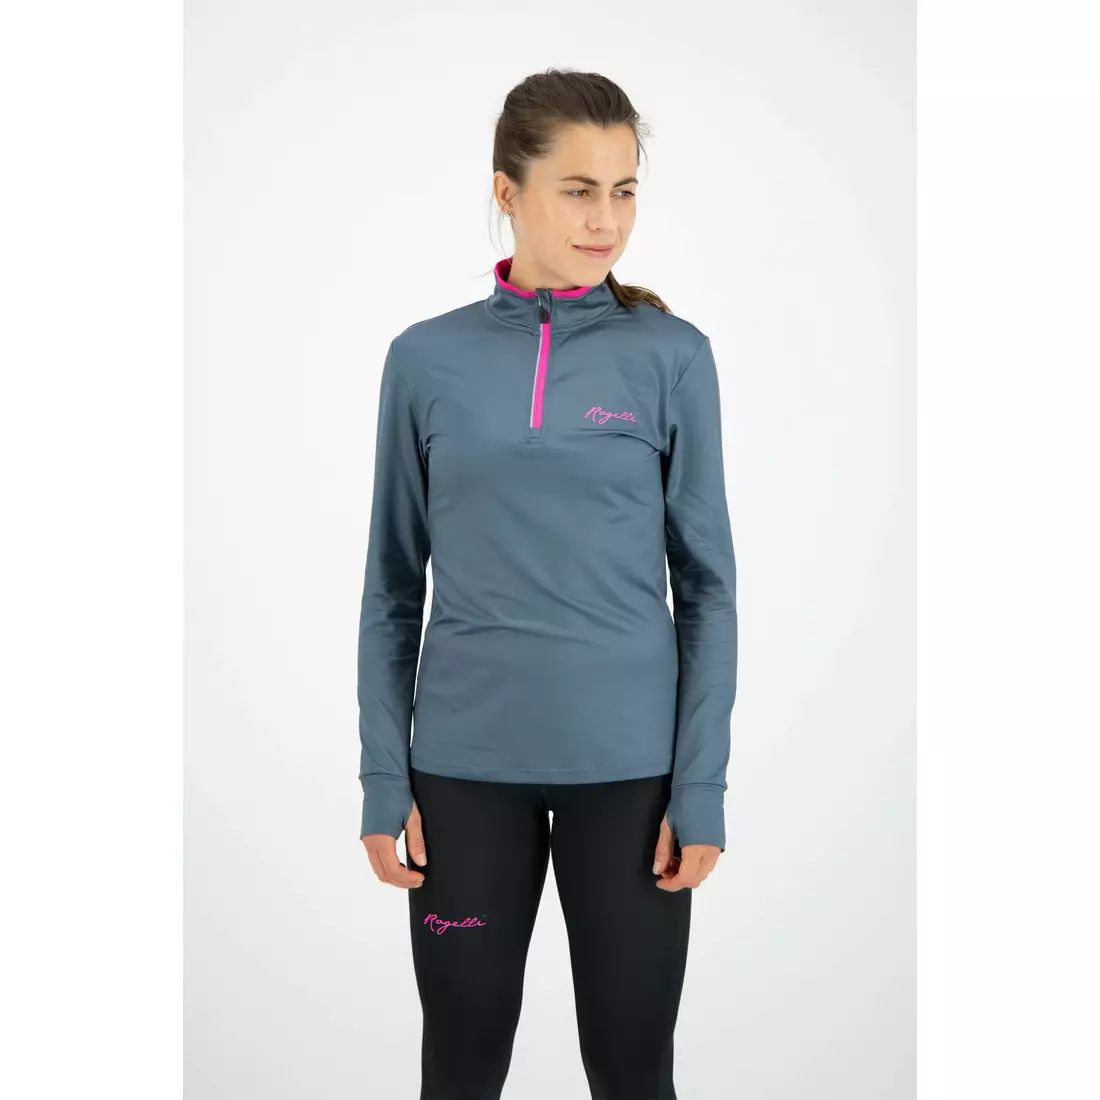 Rogelli MARBLE women's insulated T-shirt / jogging sweatshirt, grey